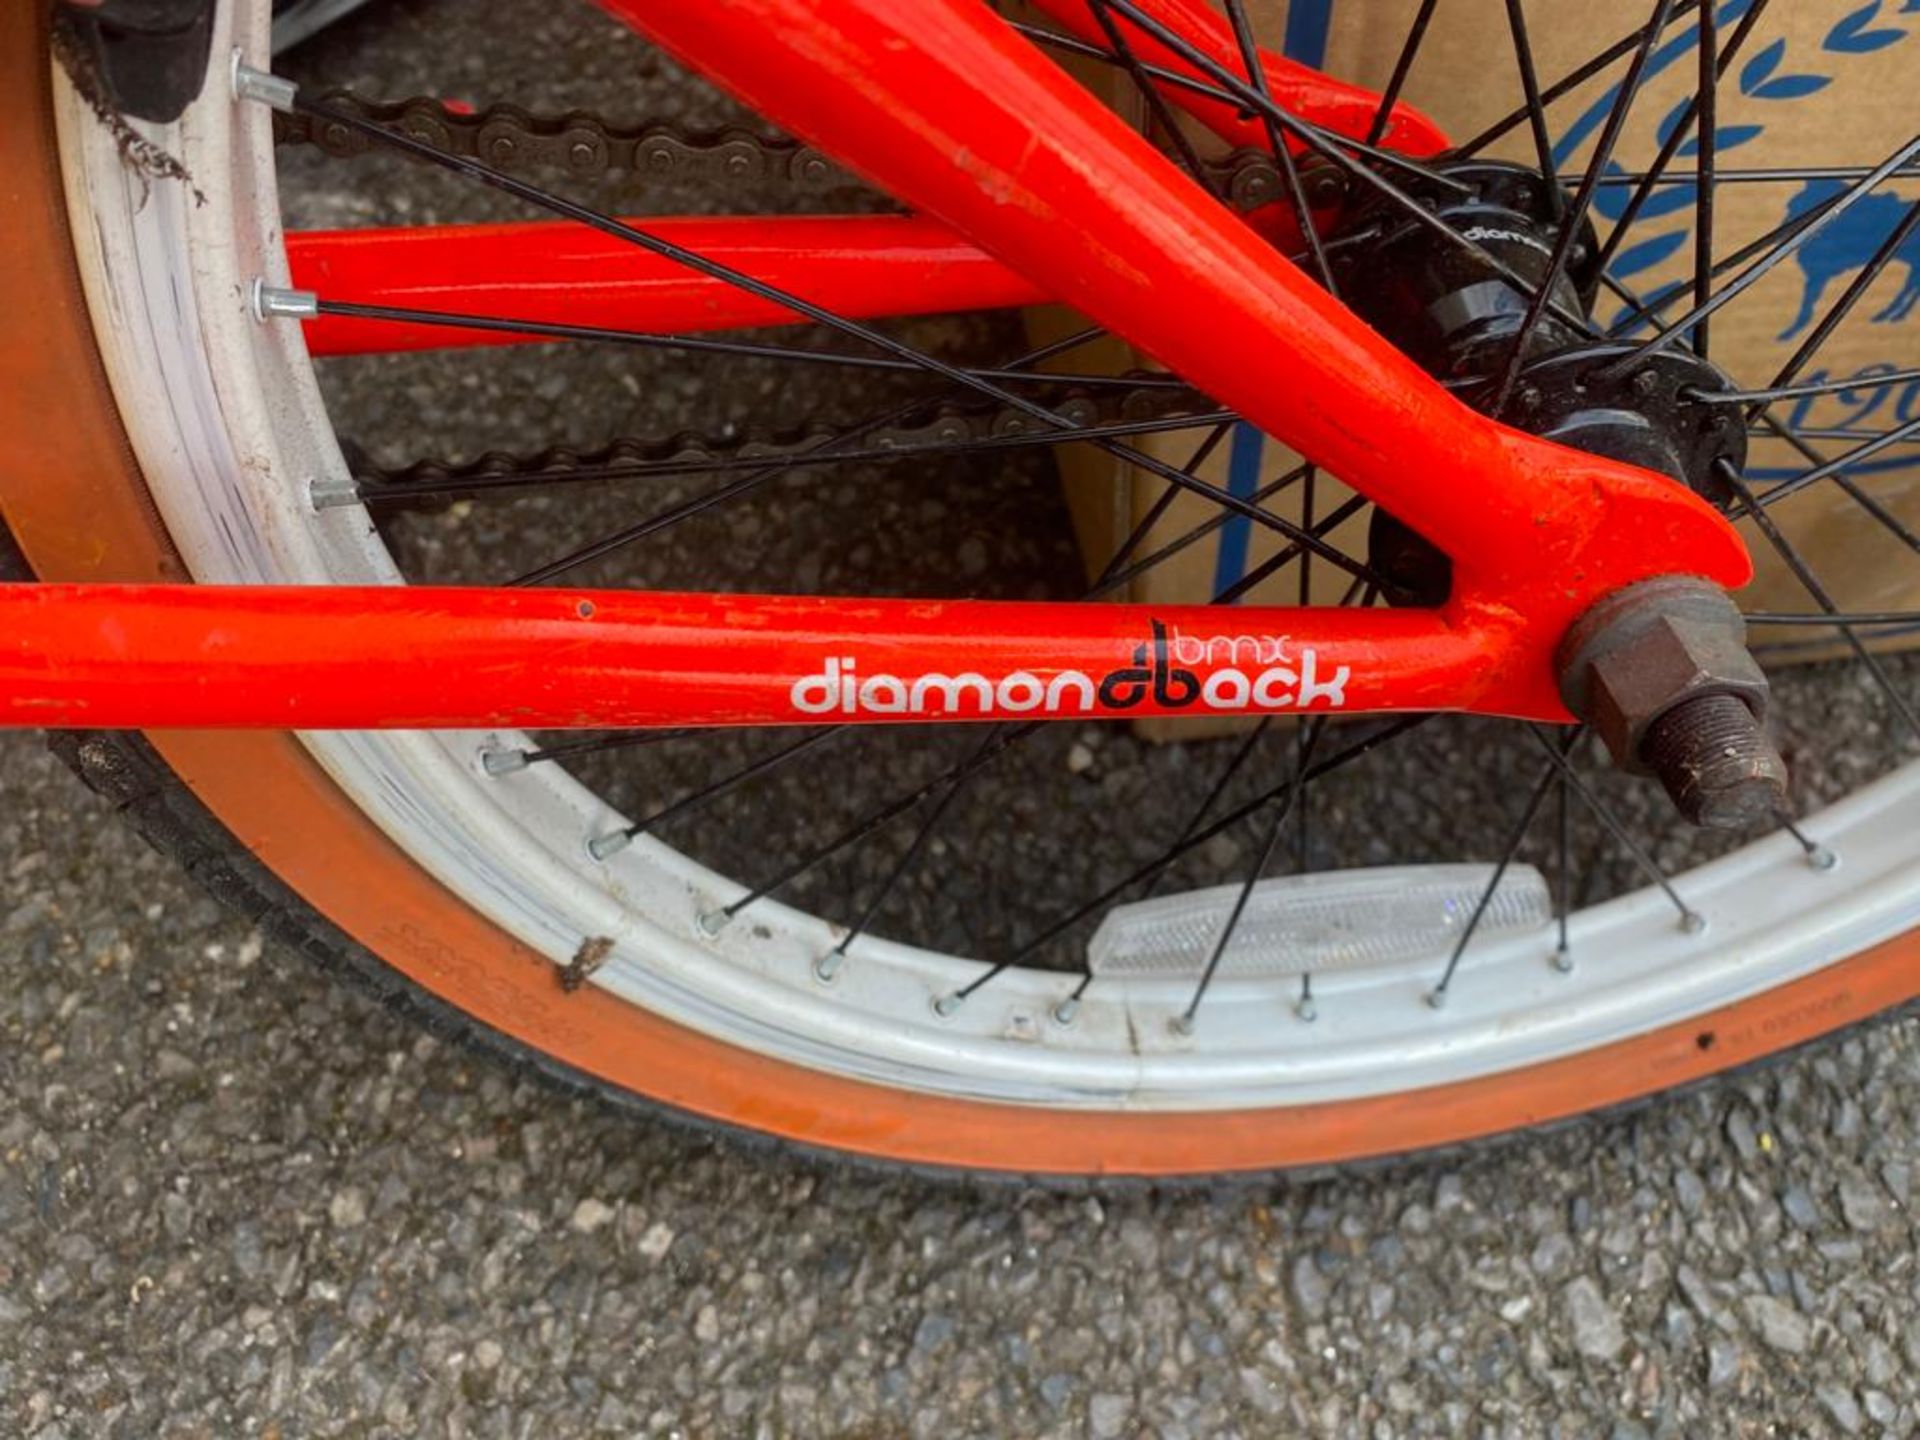 1 x Diamond Back Children's BMX Bike in Red - Image 4 of 4